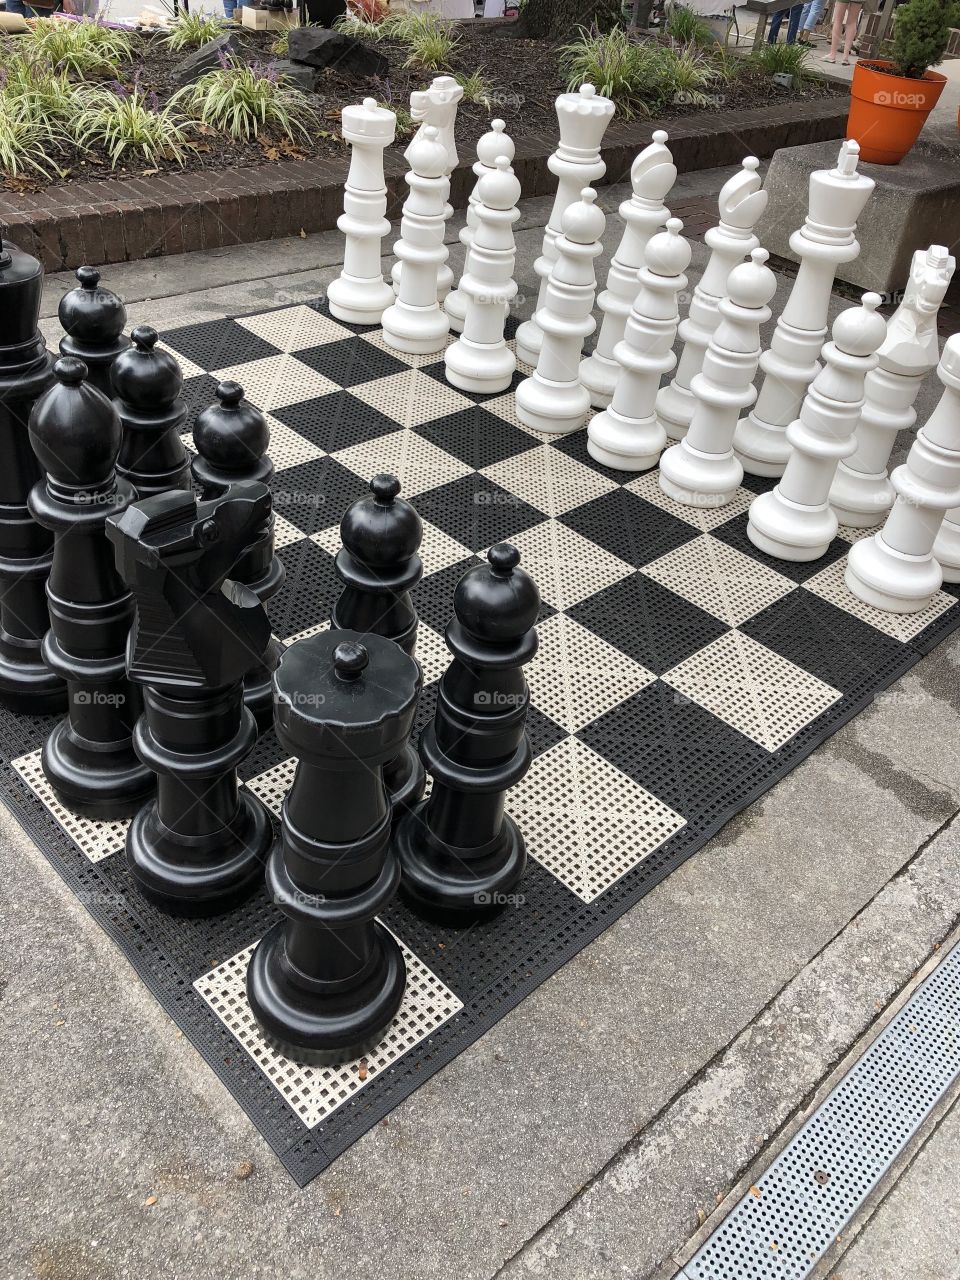 Chessboard 